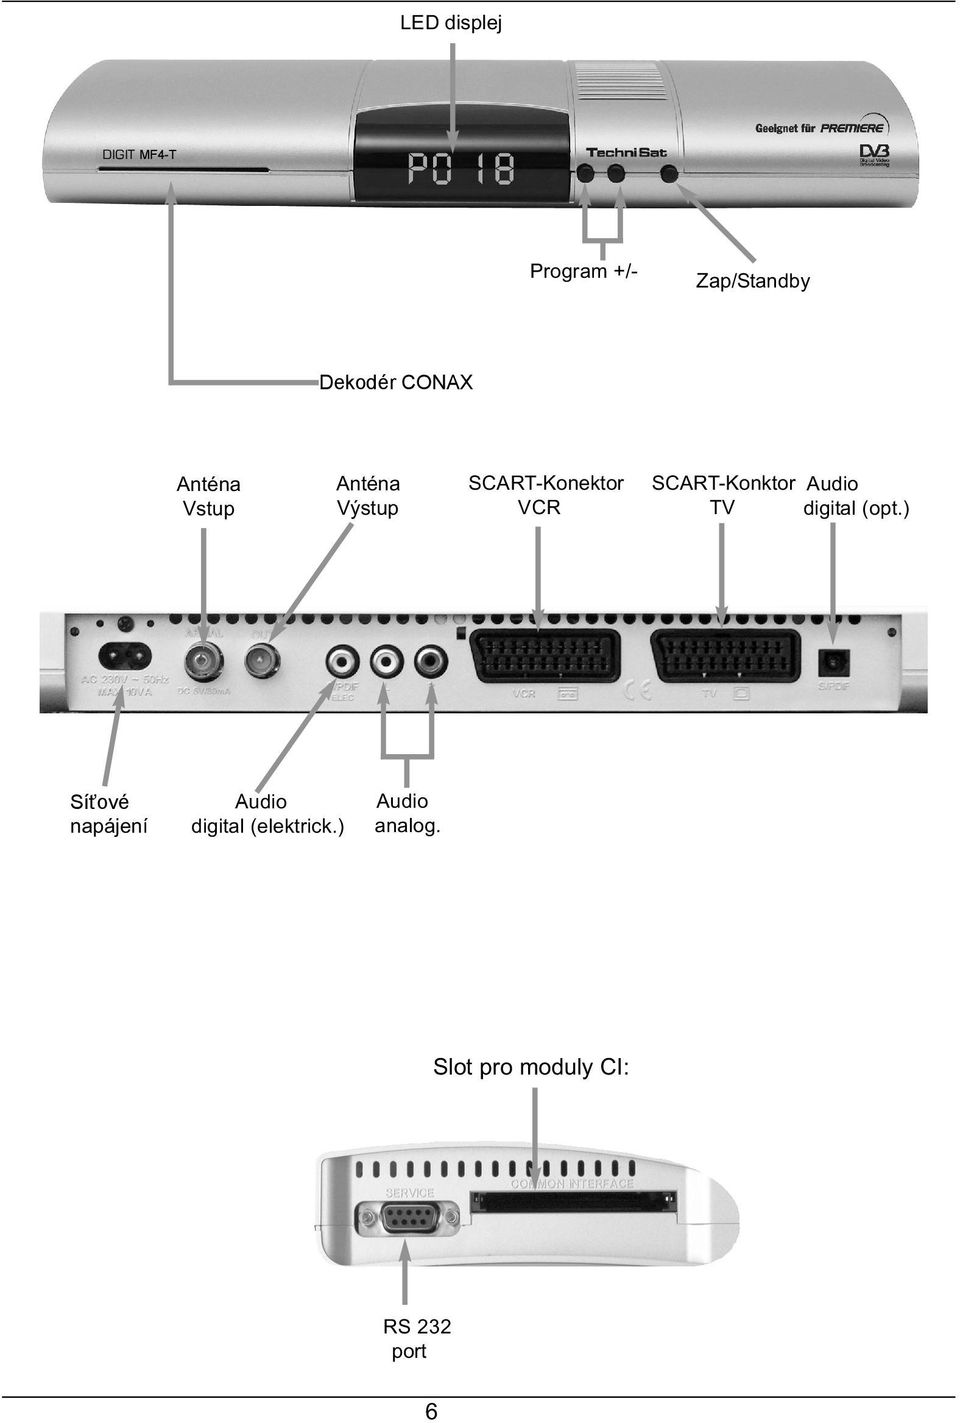 SCART-Konktor TV Audio digital (opt.